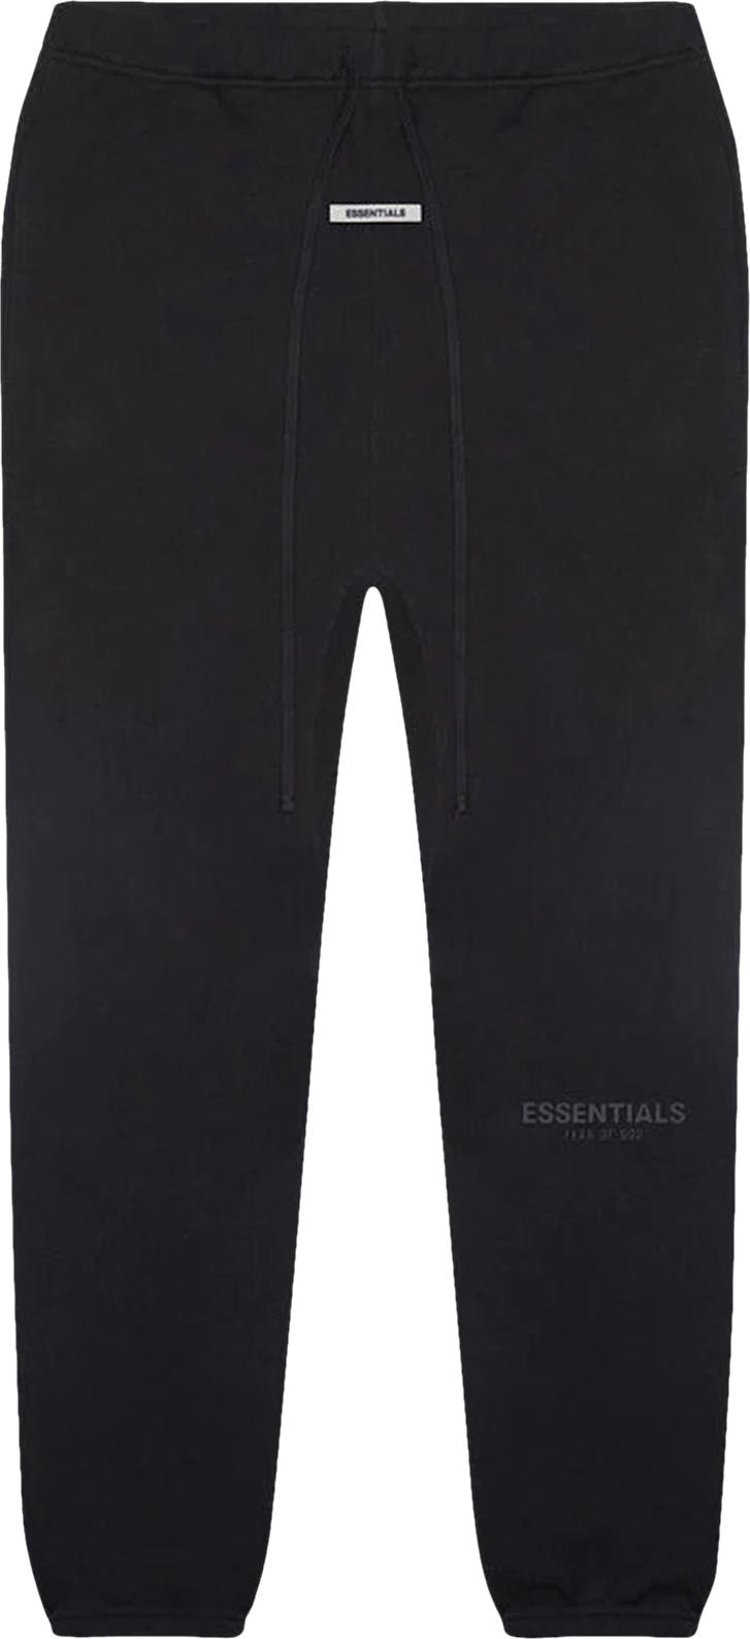 Buy Fear of God Essentials Sweatpants 'Black' - 0130 25050 0112 001